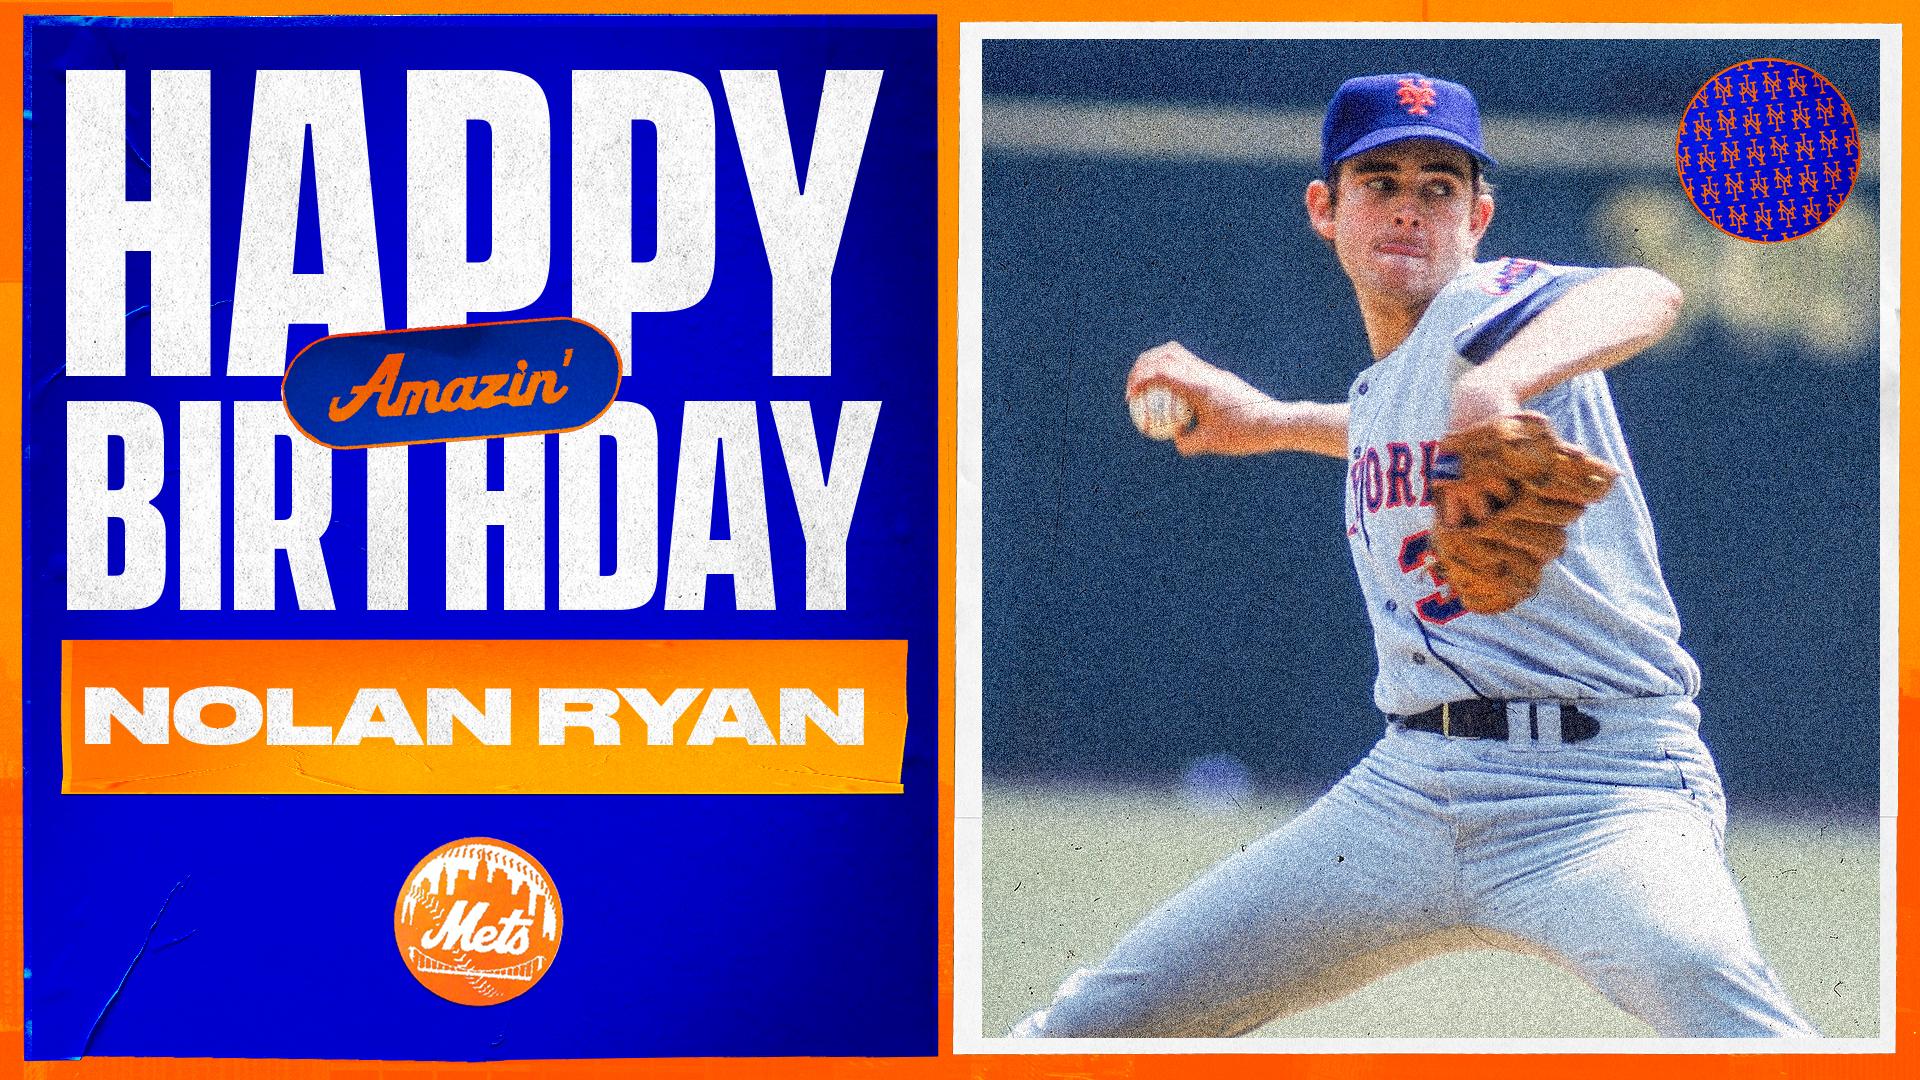 New York Mets on X: Happy birthday, Nolan Ryan! 🎂🥳